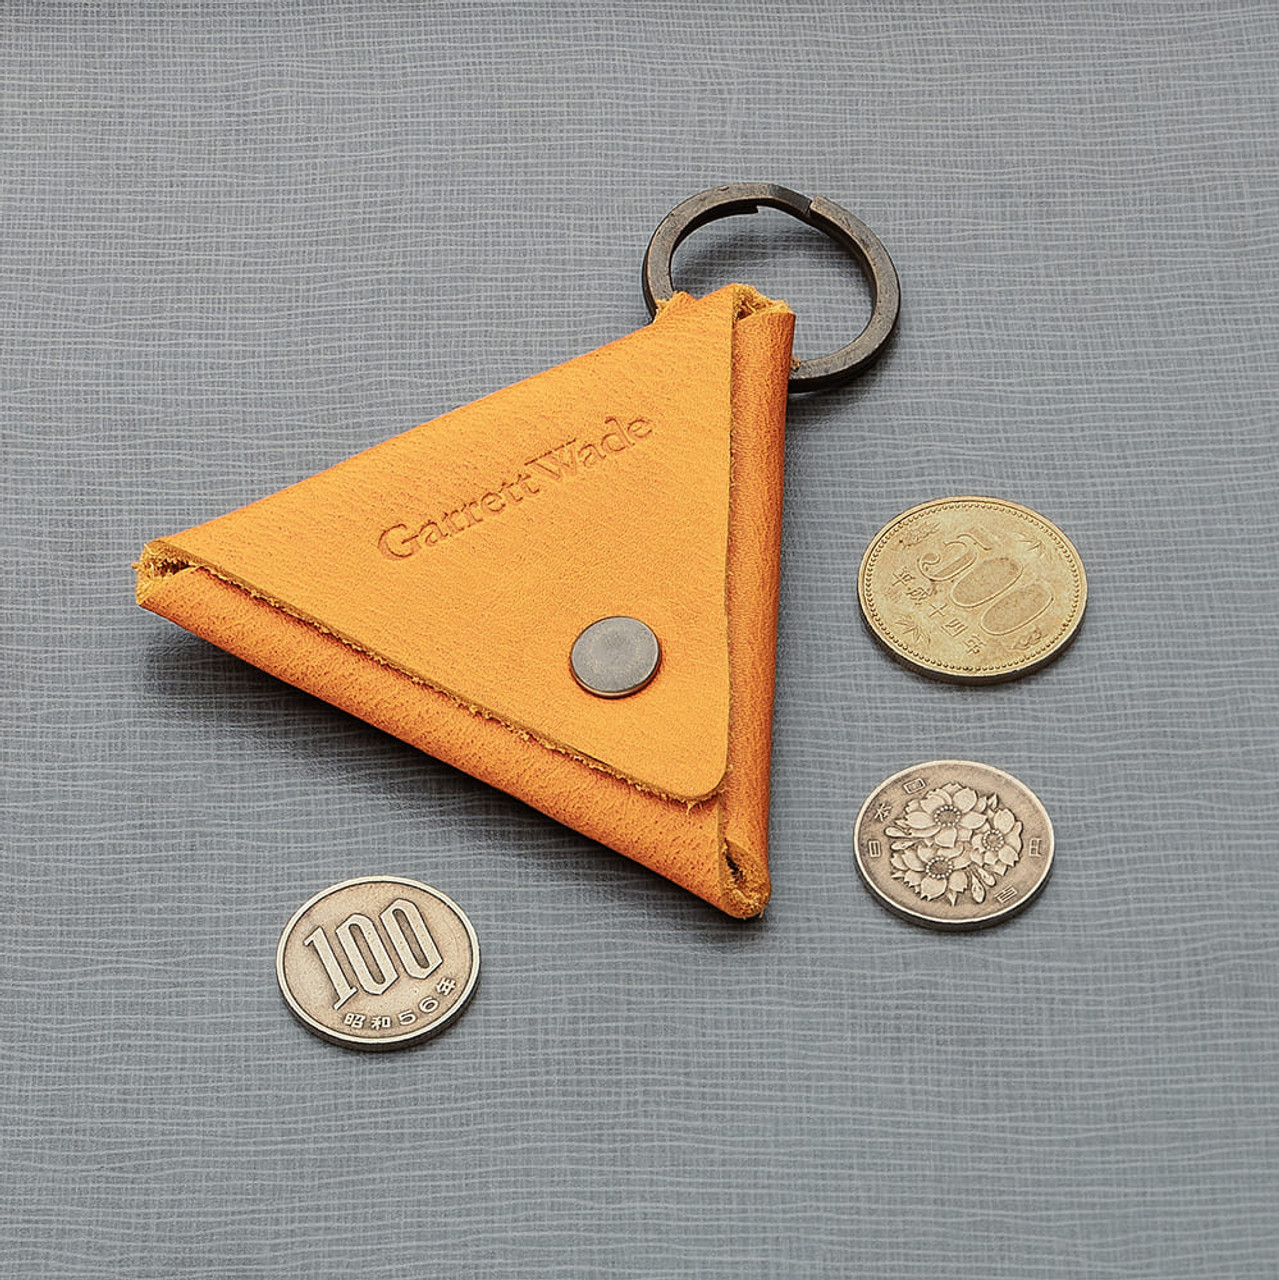 Triangular Leather Coin Holder